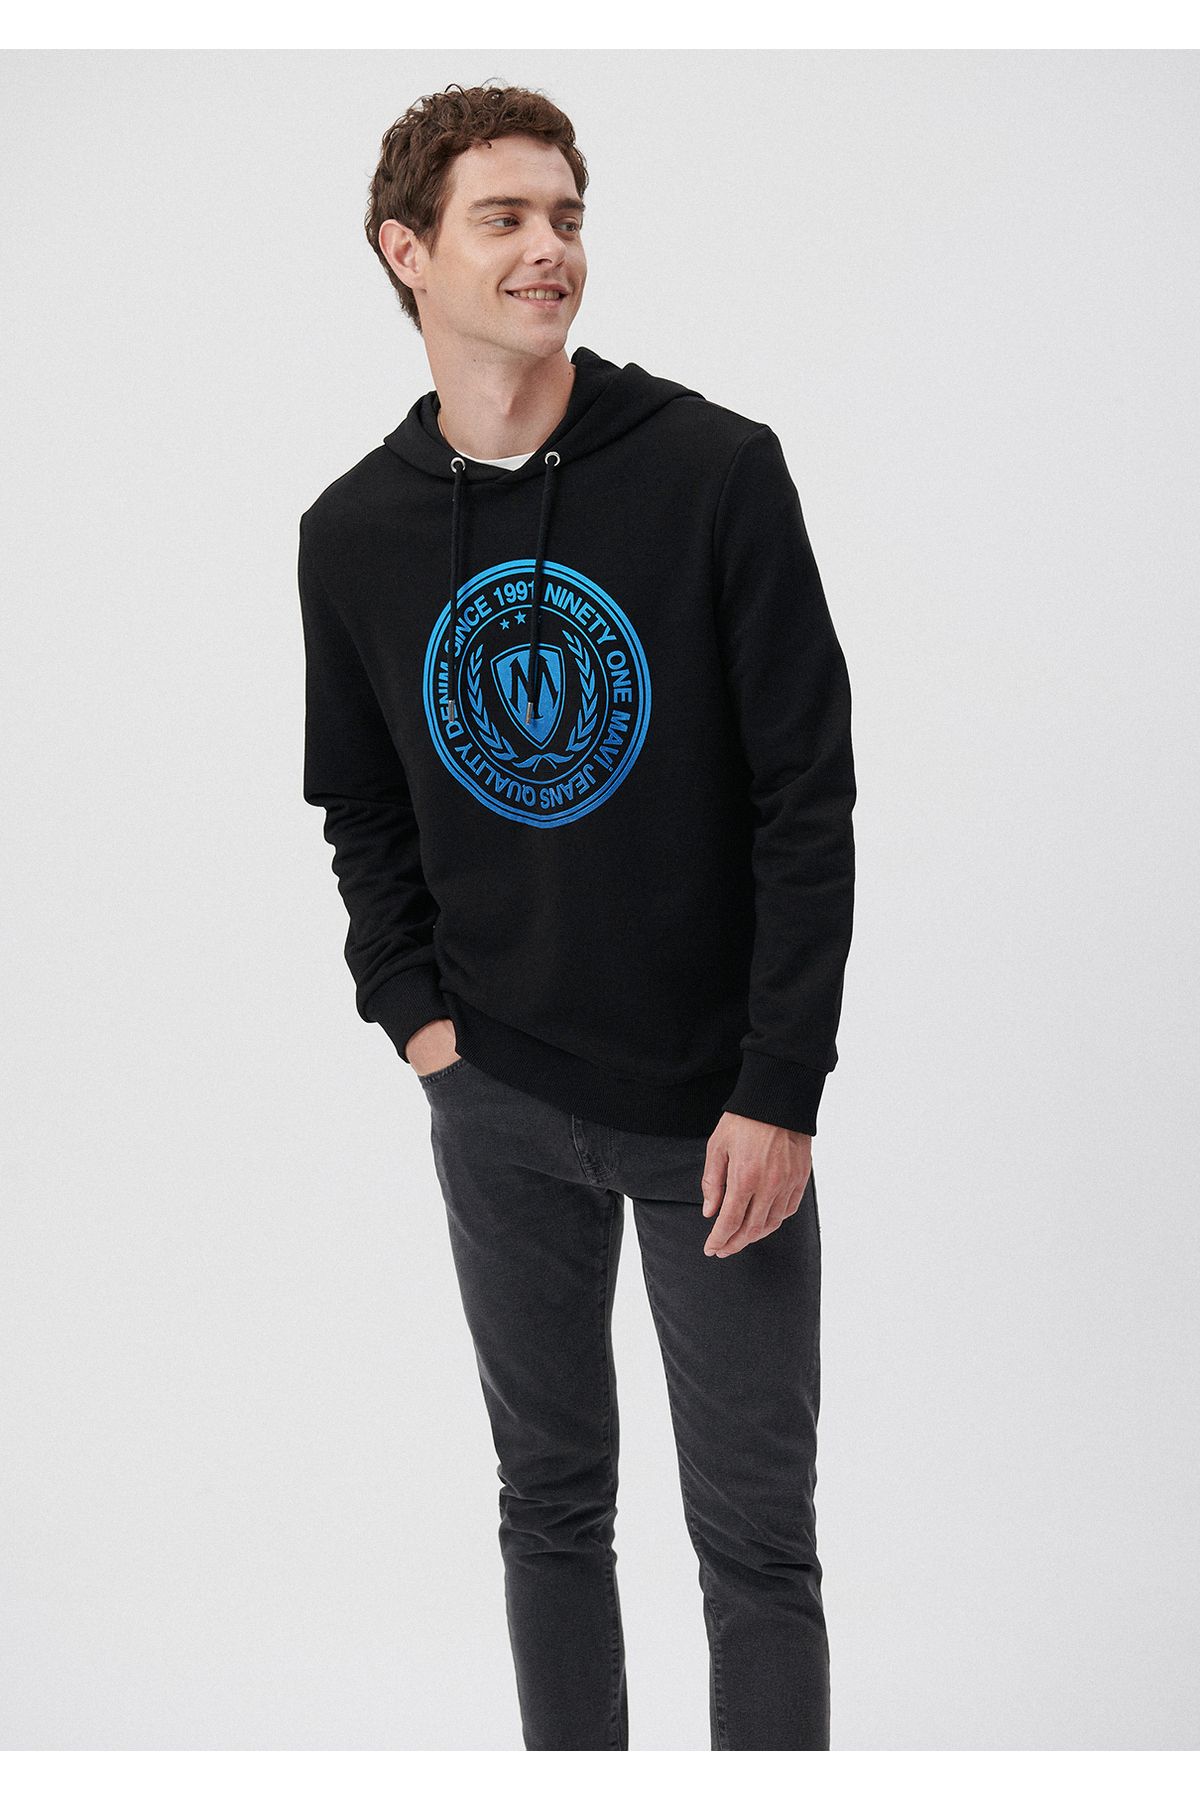 Mavi Logo Baskılı Kapüşonlu Siyah Sweatshirt 0611721-900